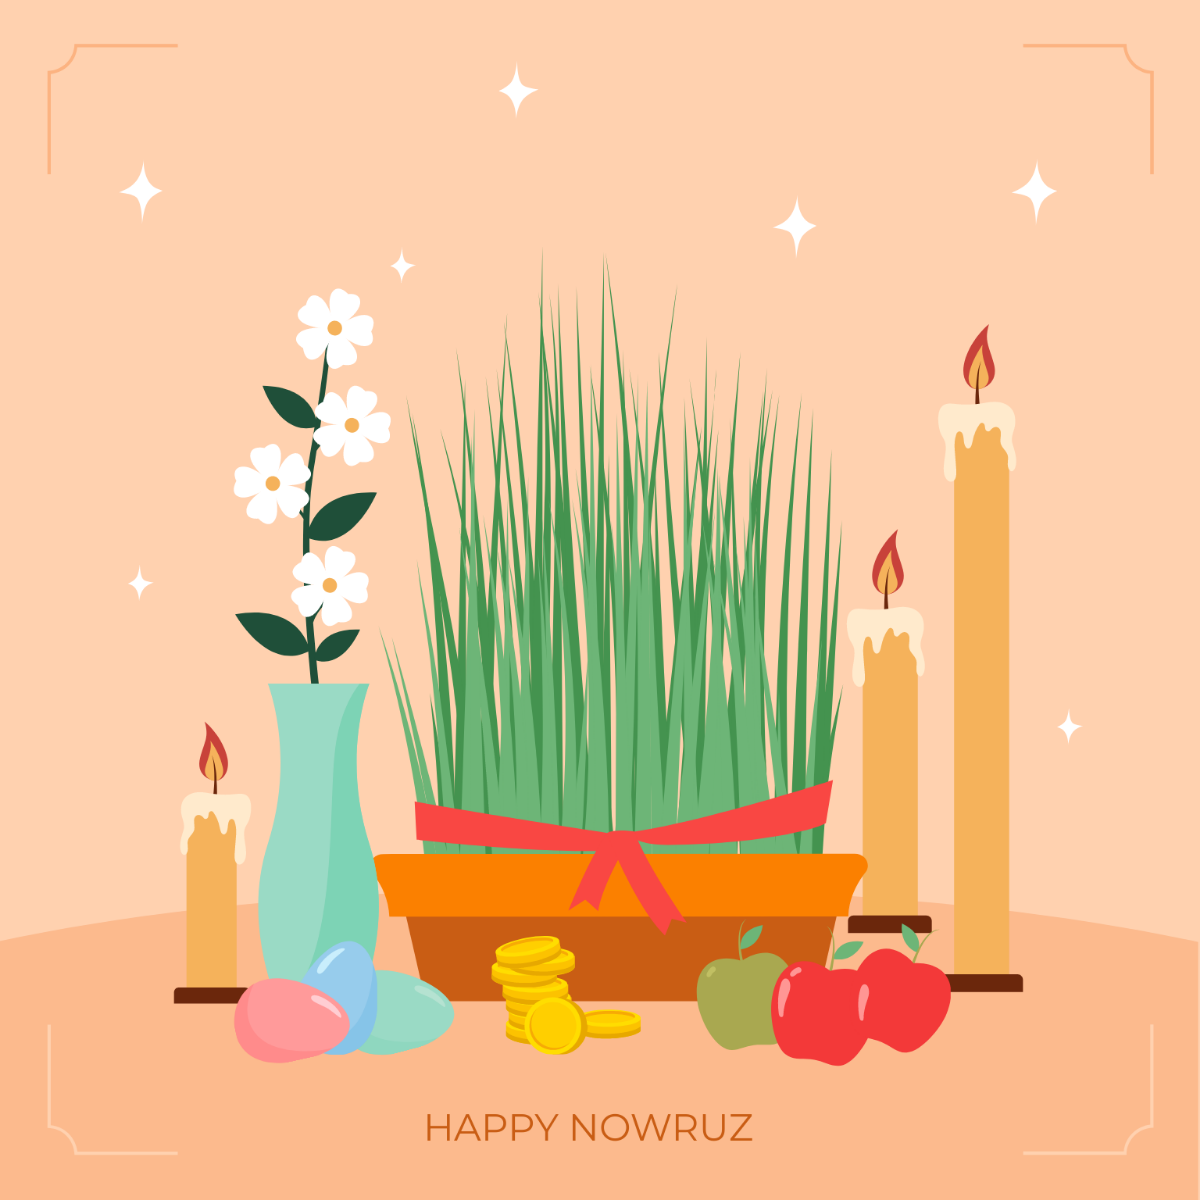 Nowruz Image Template